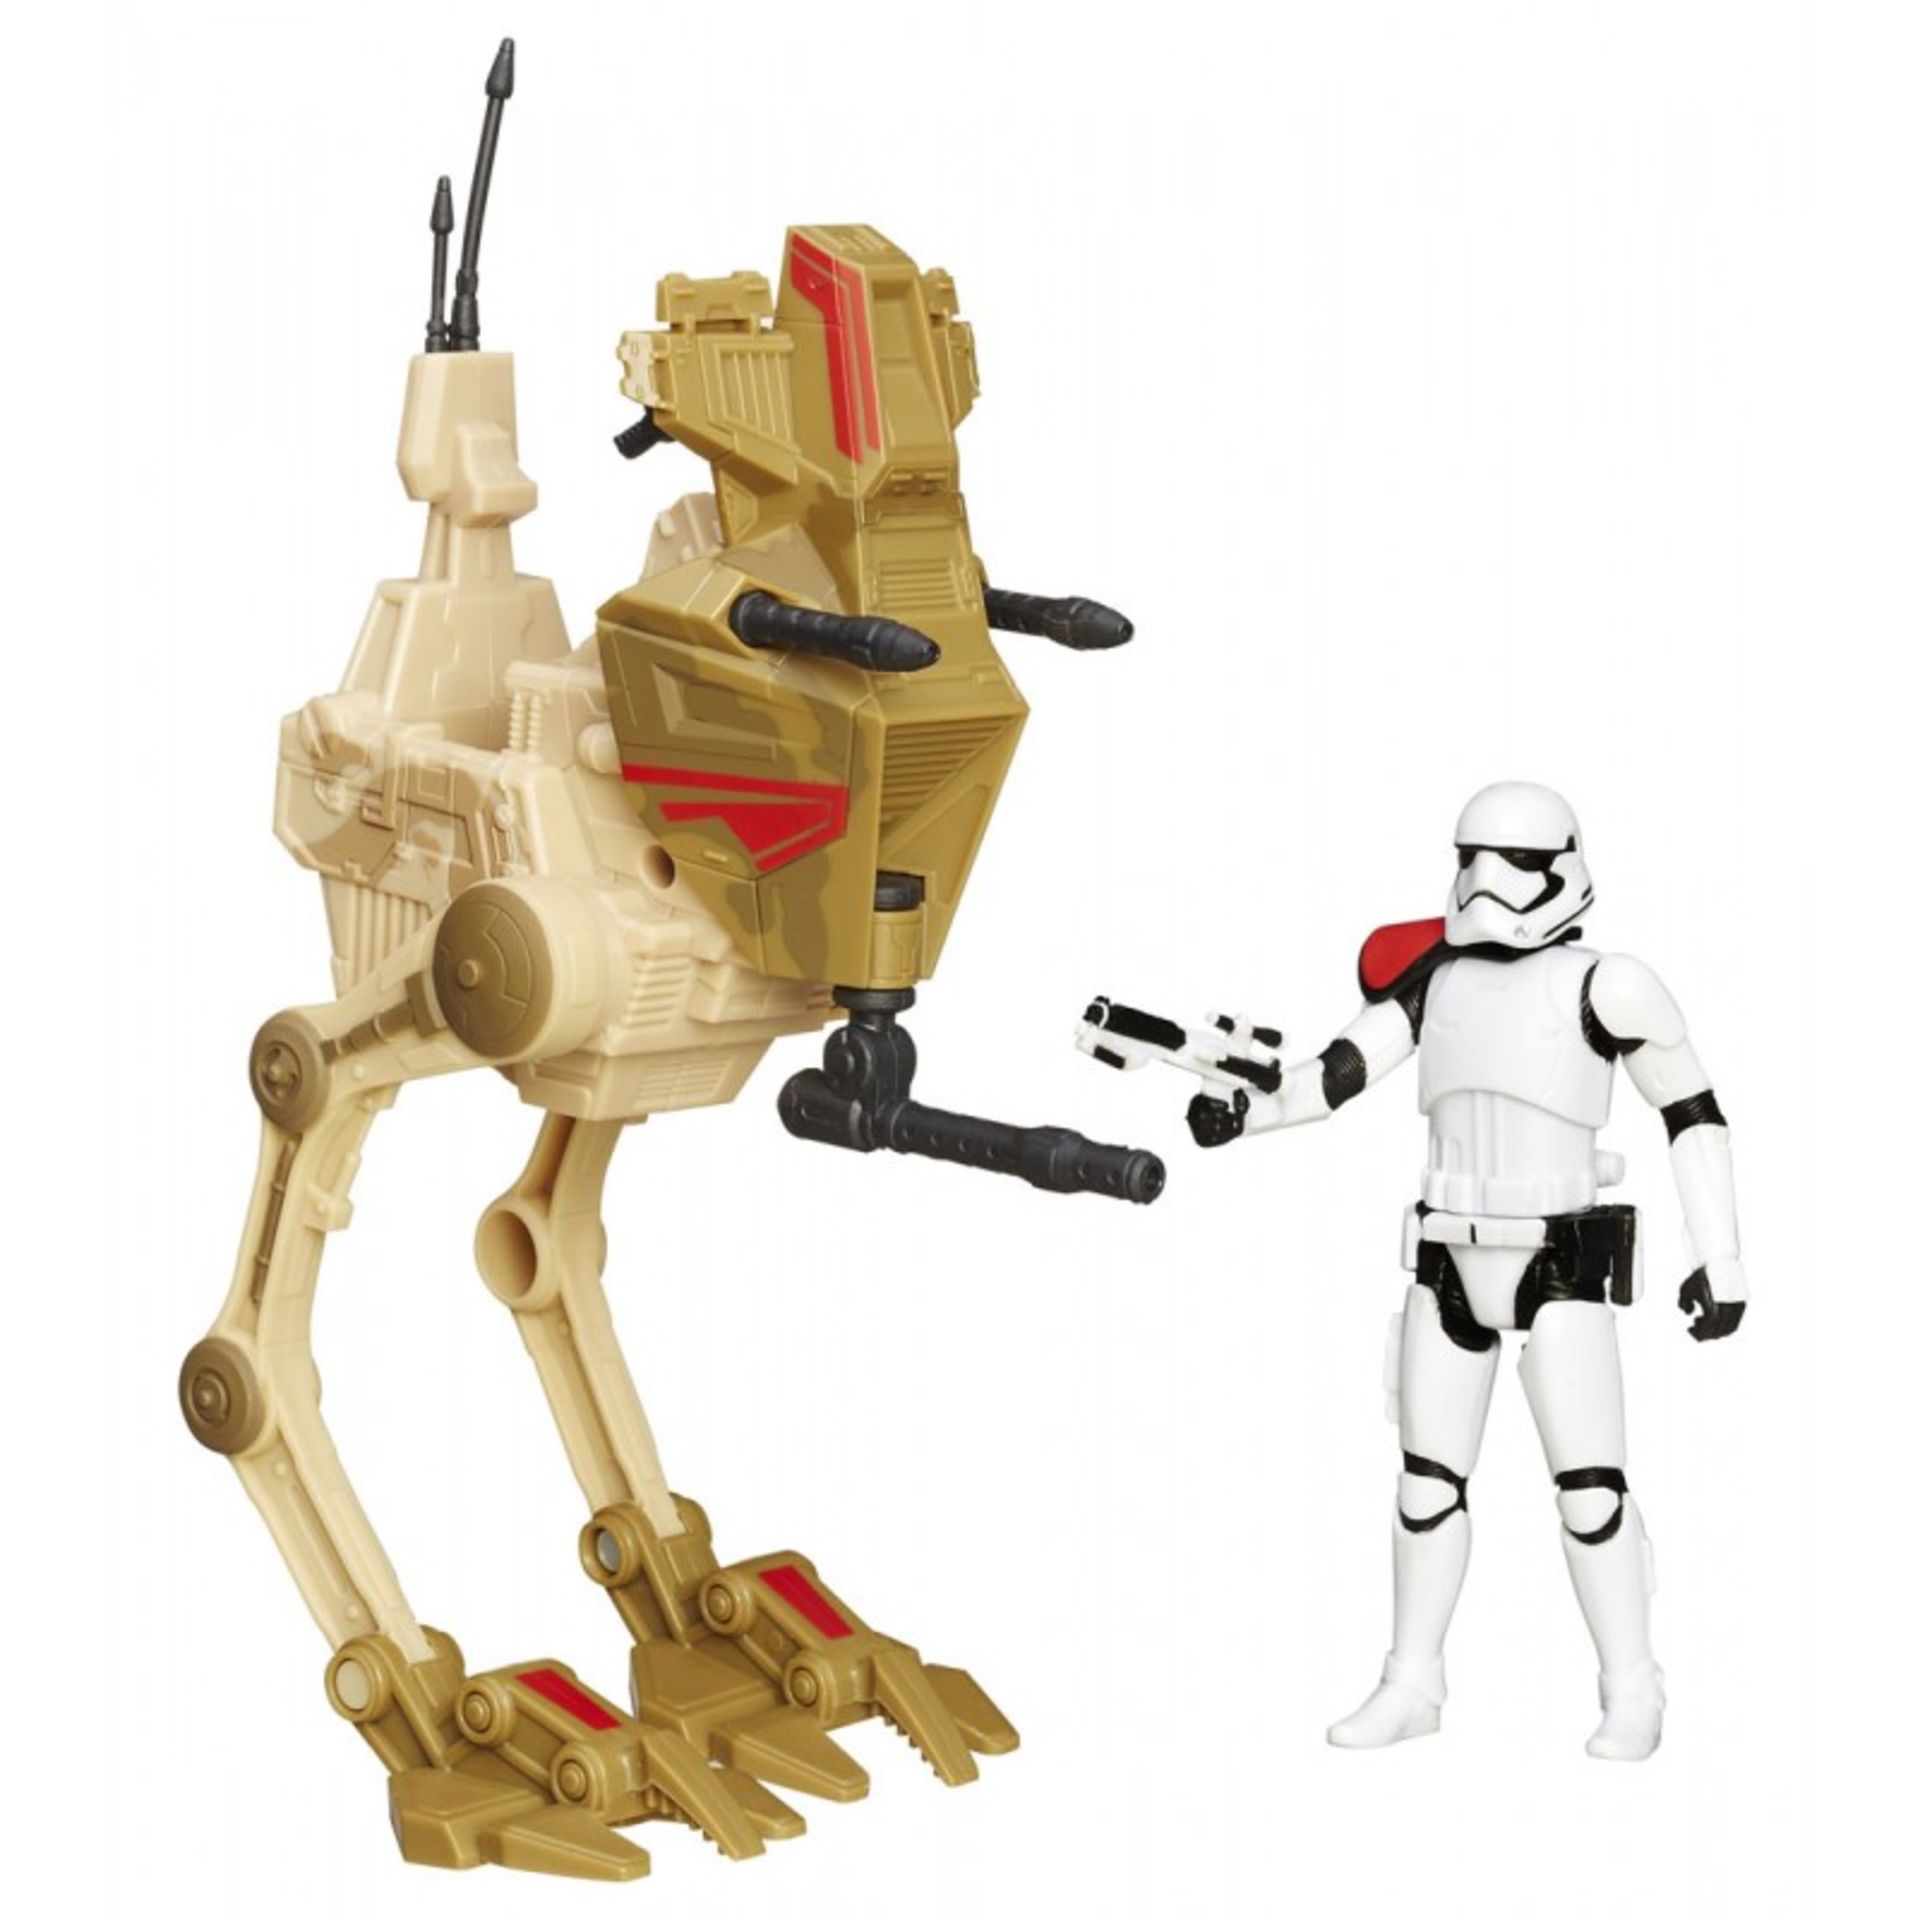 + VAT Brand New Star Wars The Force Awakens Desert Assault Walker - Online Price £32.99 (My Geek